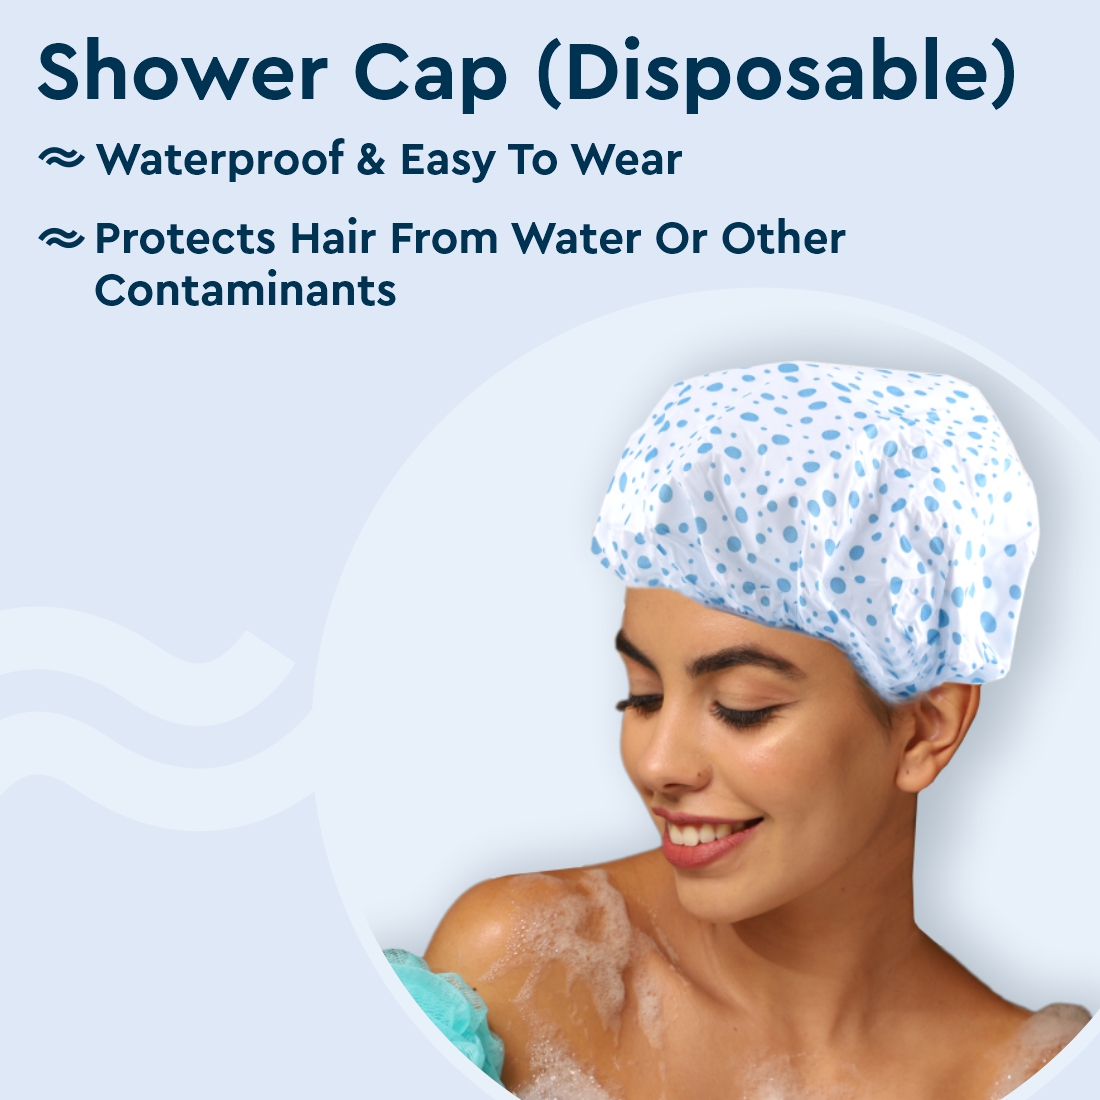 Shower Cap Disposable Pack of 2 - 4 Caps Each